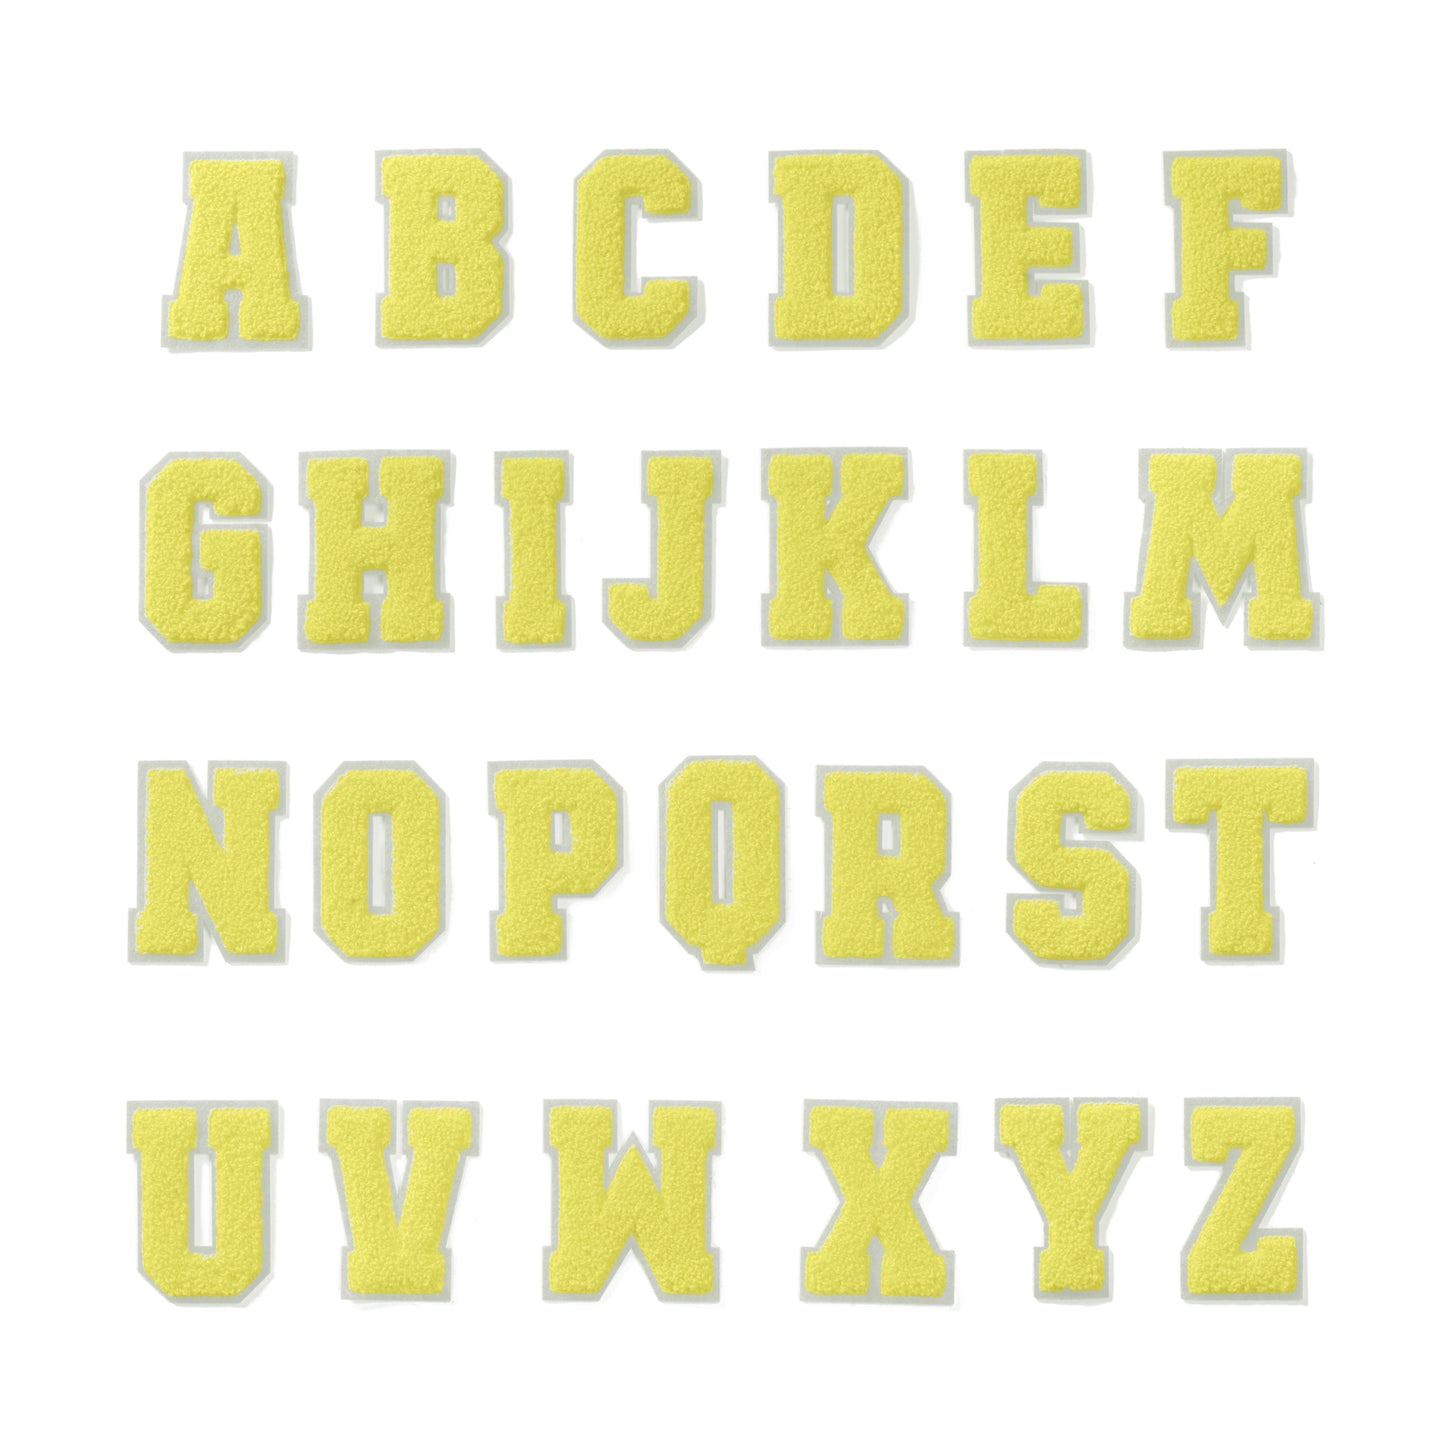 Custom Kids Yellow Sweatshirt - 3 Letters